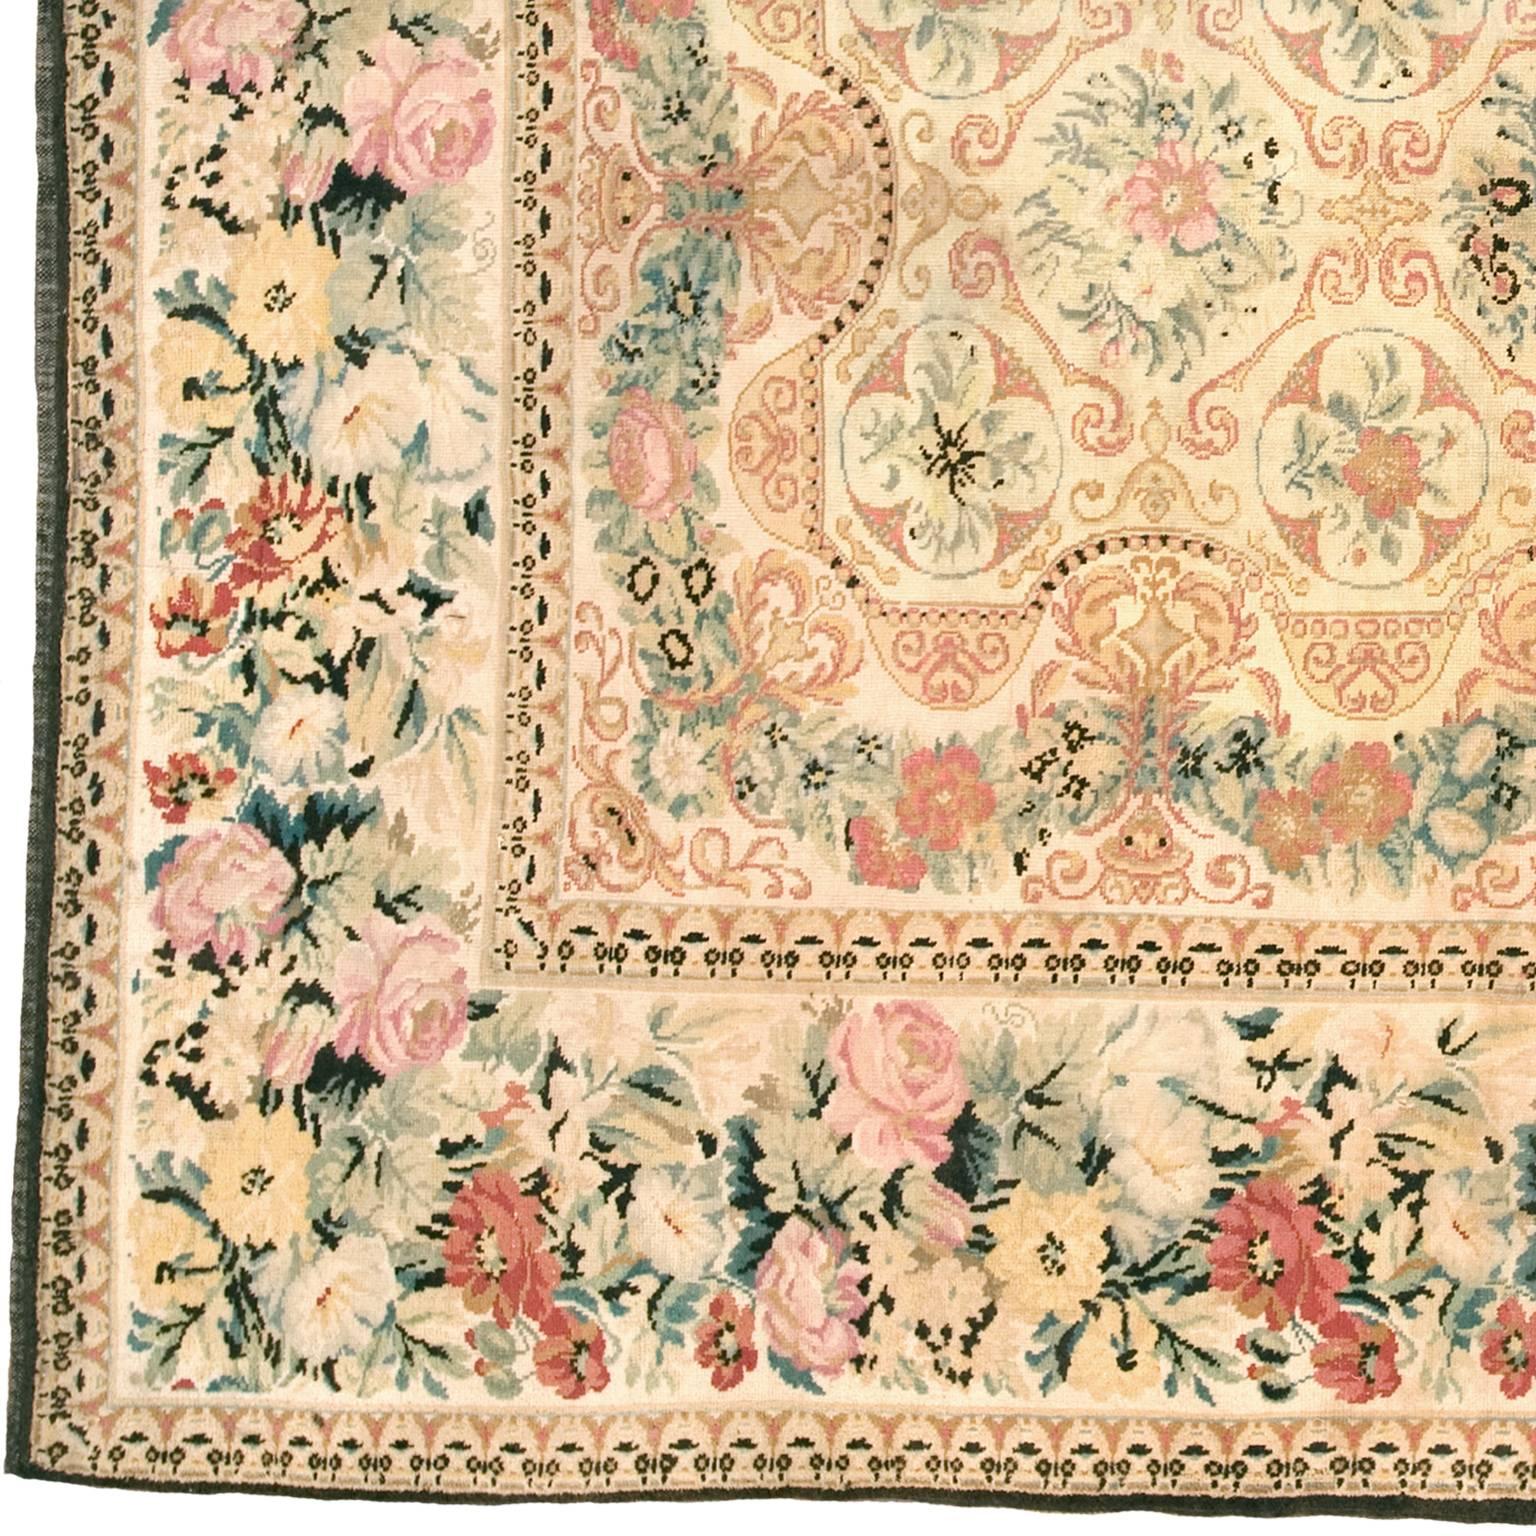 Ukrainian pile carpet with floral design, 19th century.
Urania, circa early 19th century
Handwoven.